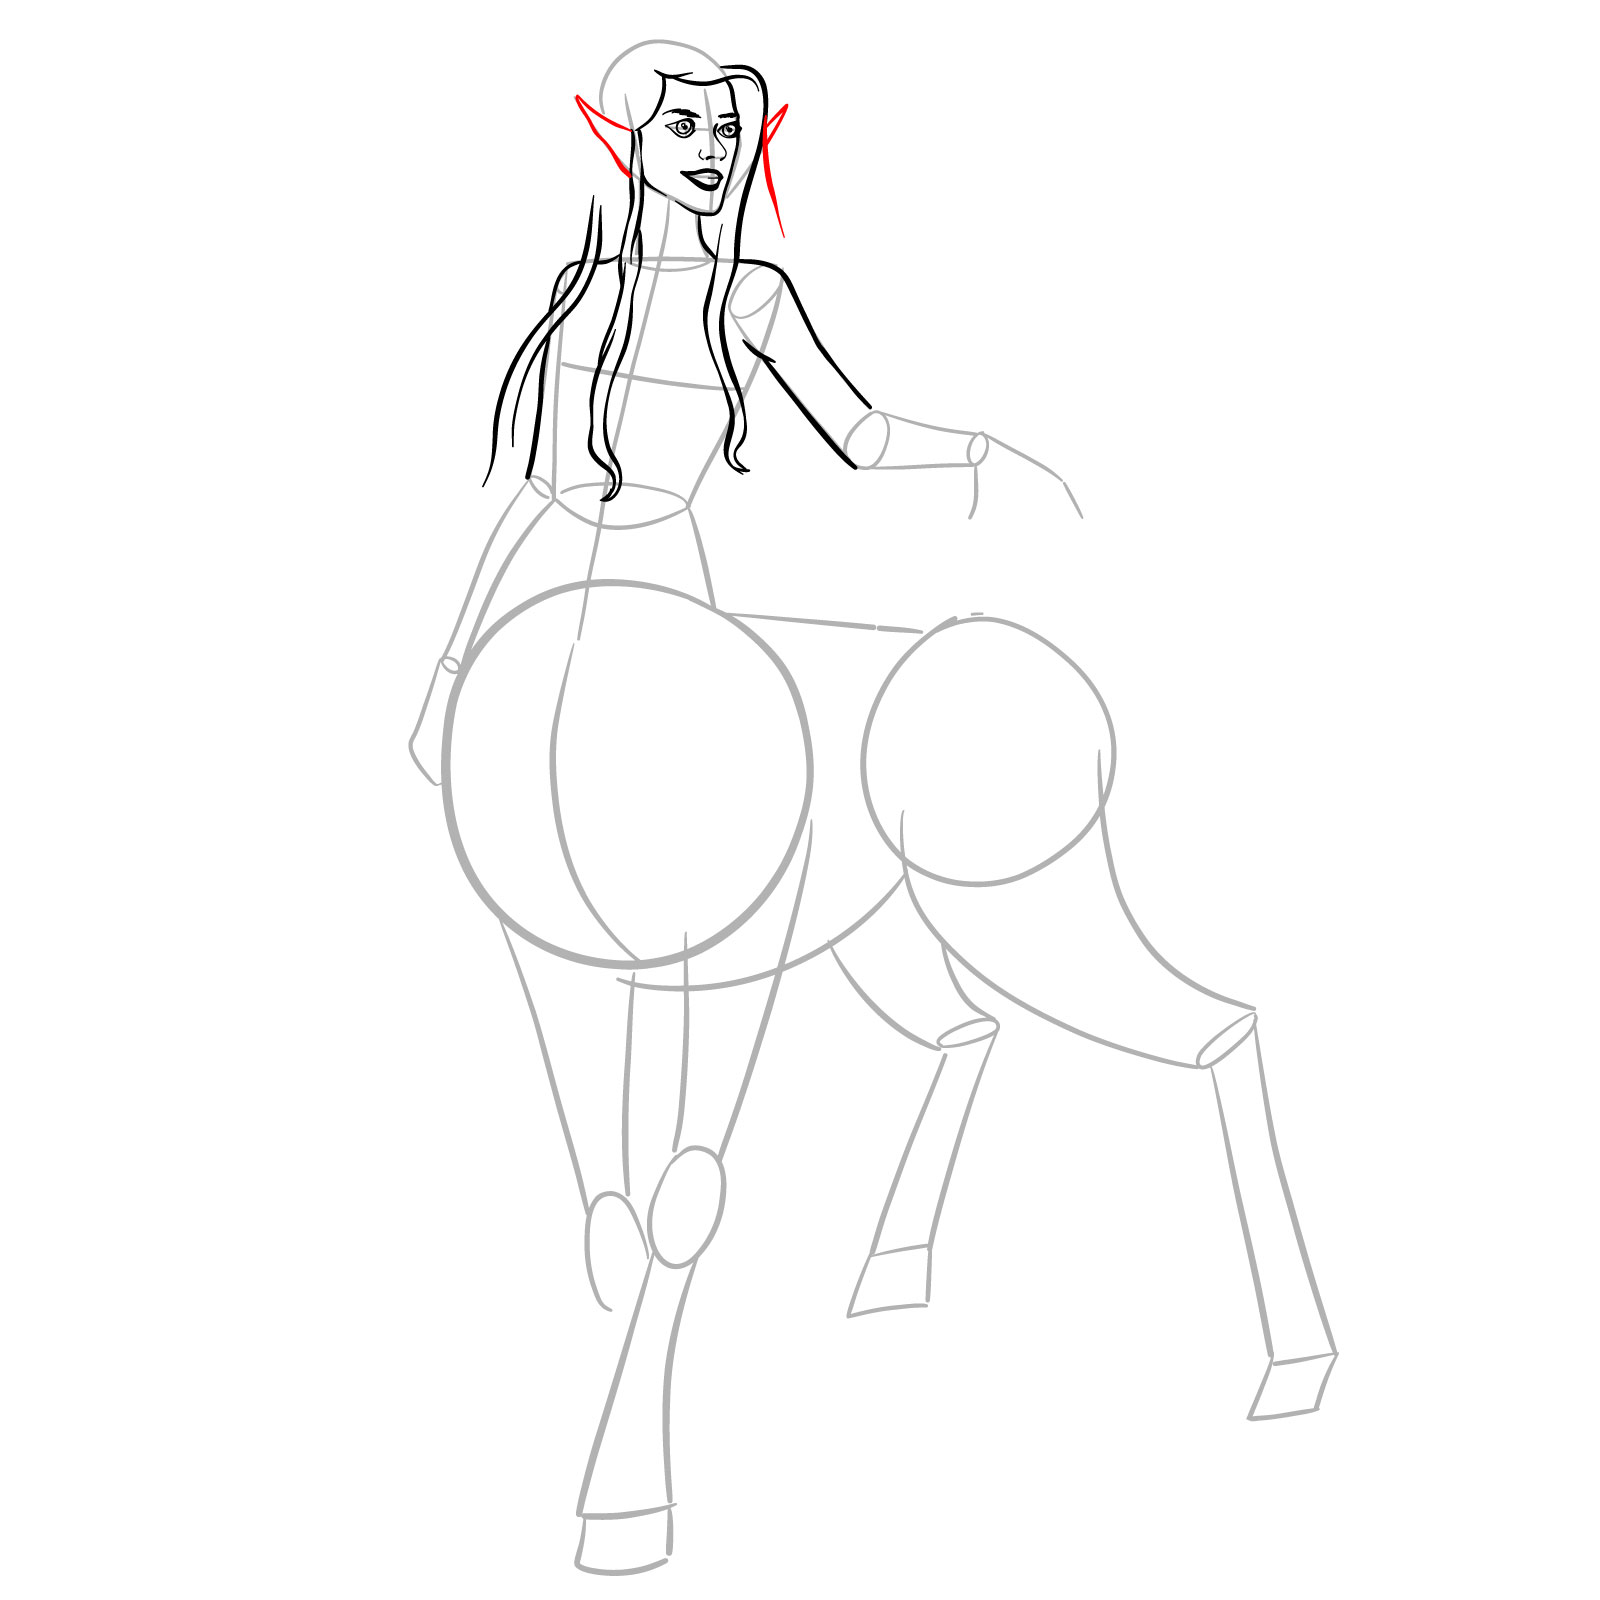 How to draw a Female Centaur - step 16